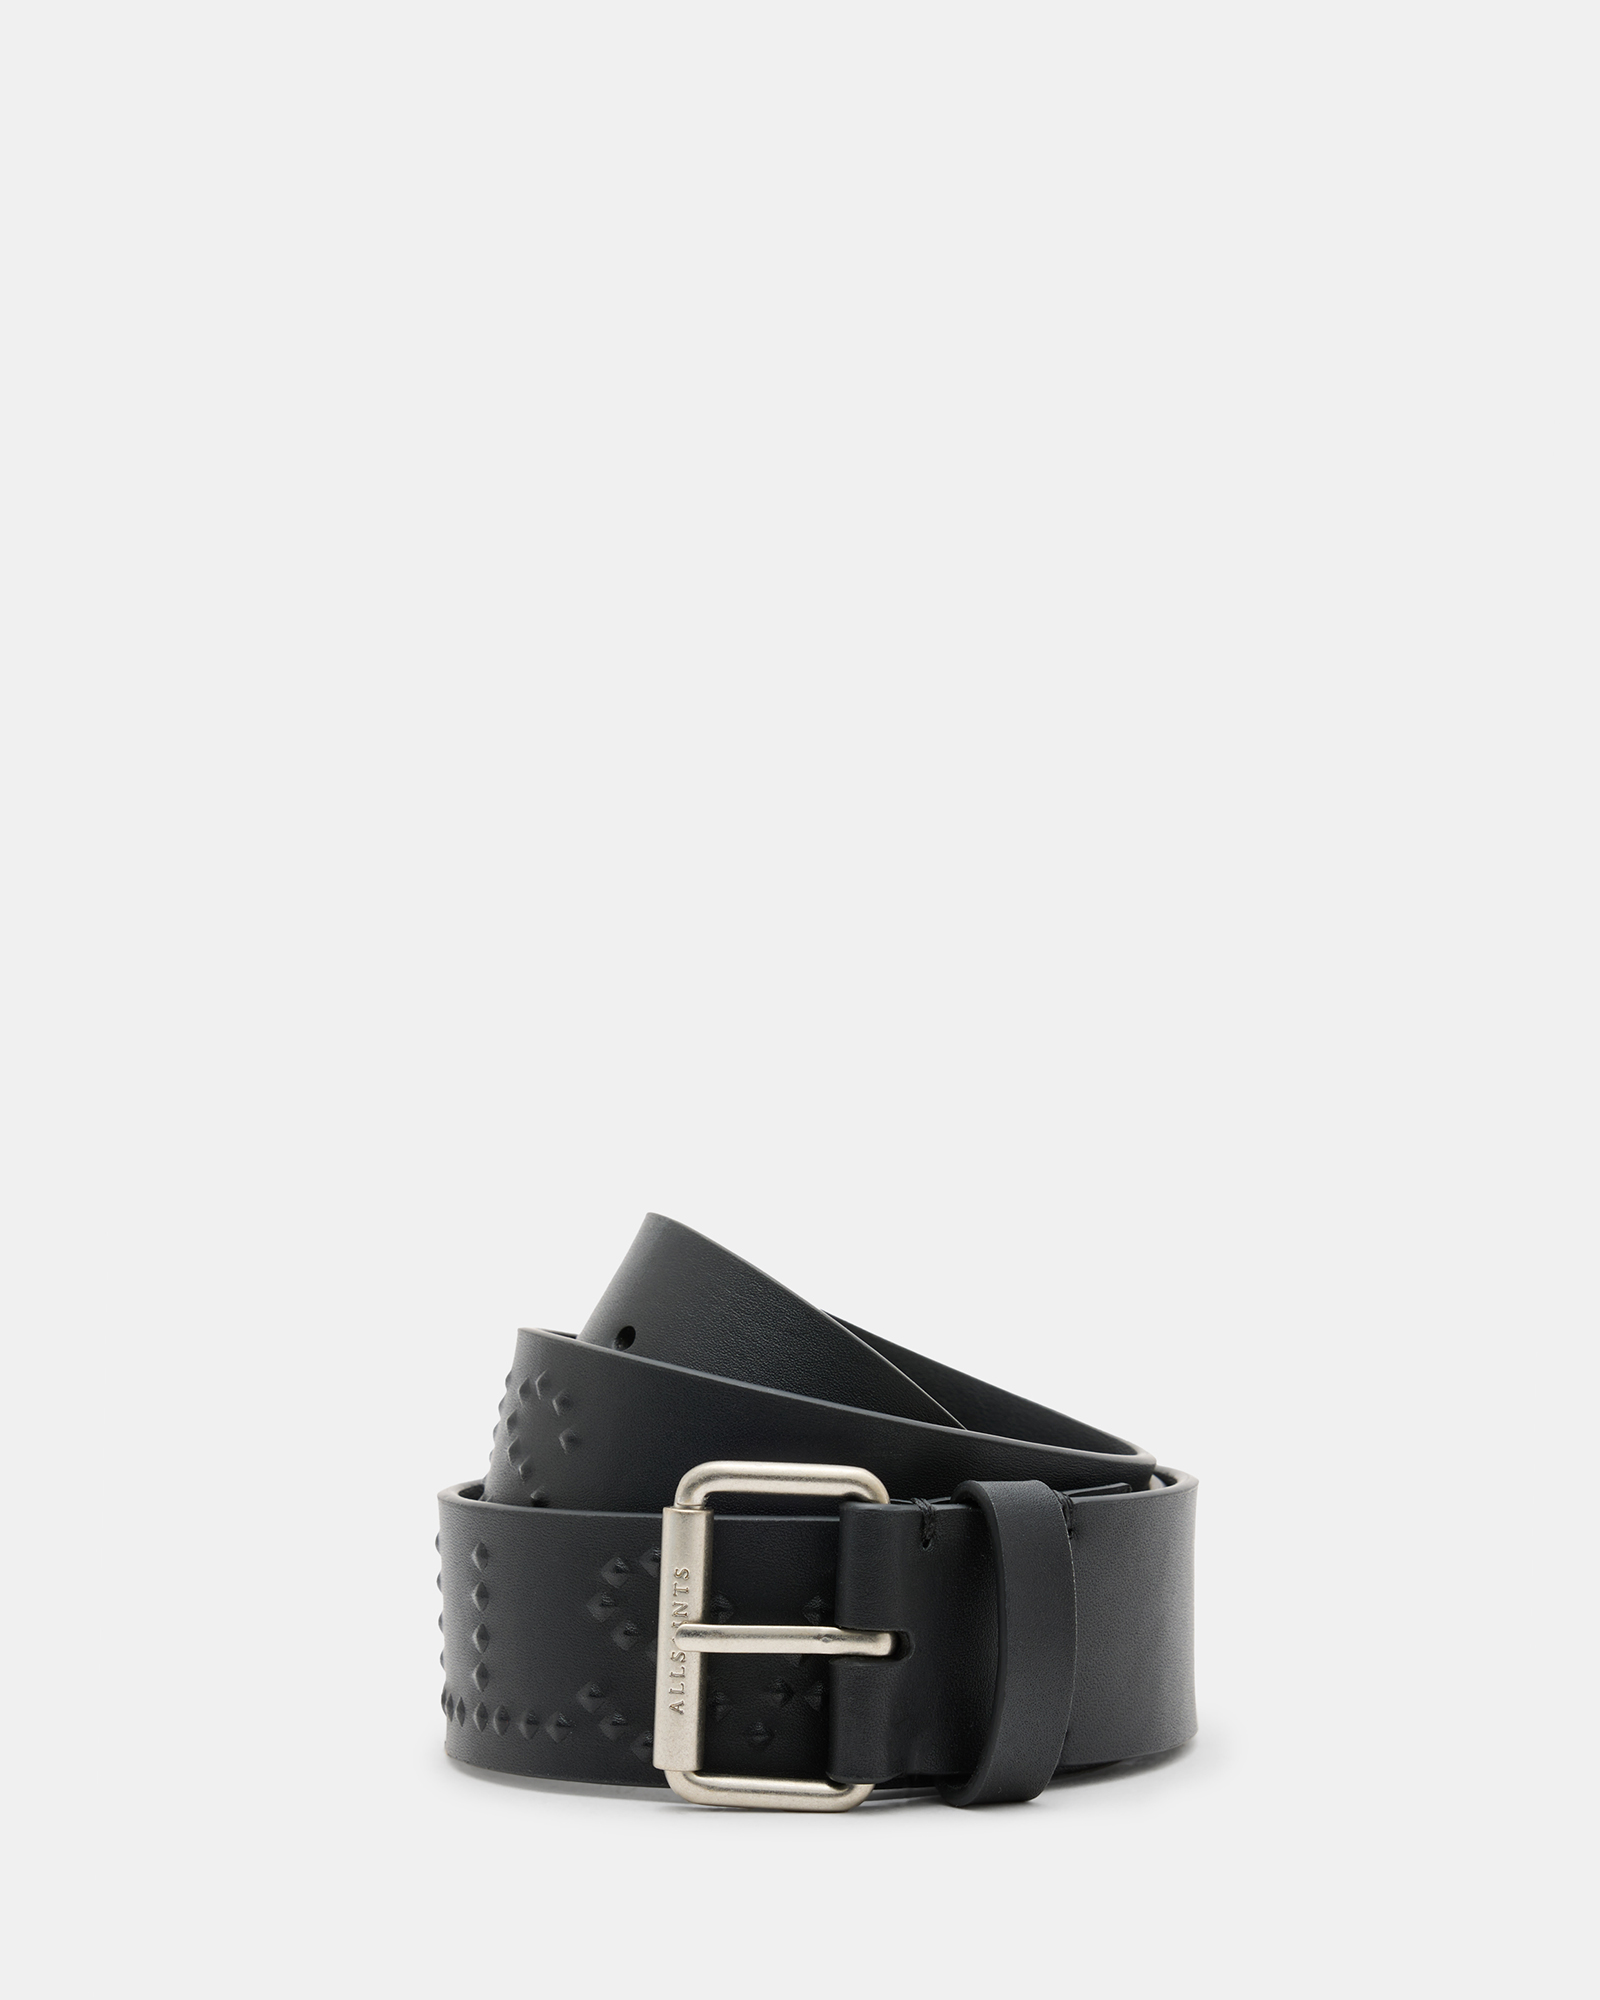 AllSaints AS Rocks Studded Leather Belt,, BLACK/ANTQ NICKEL